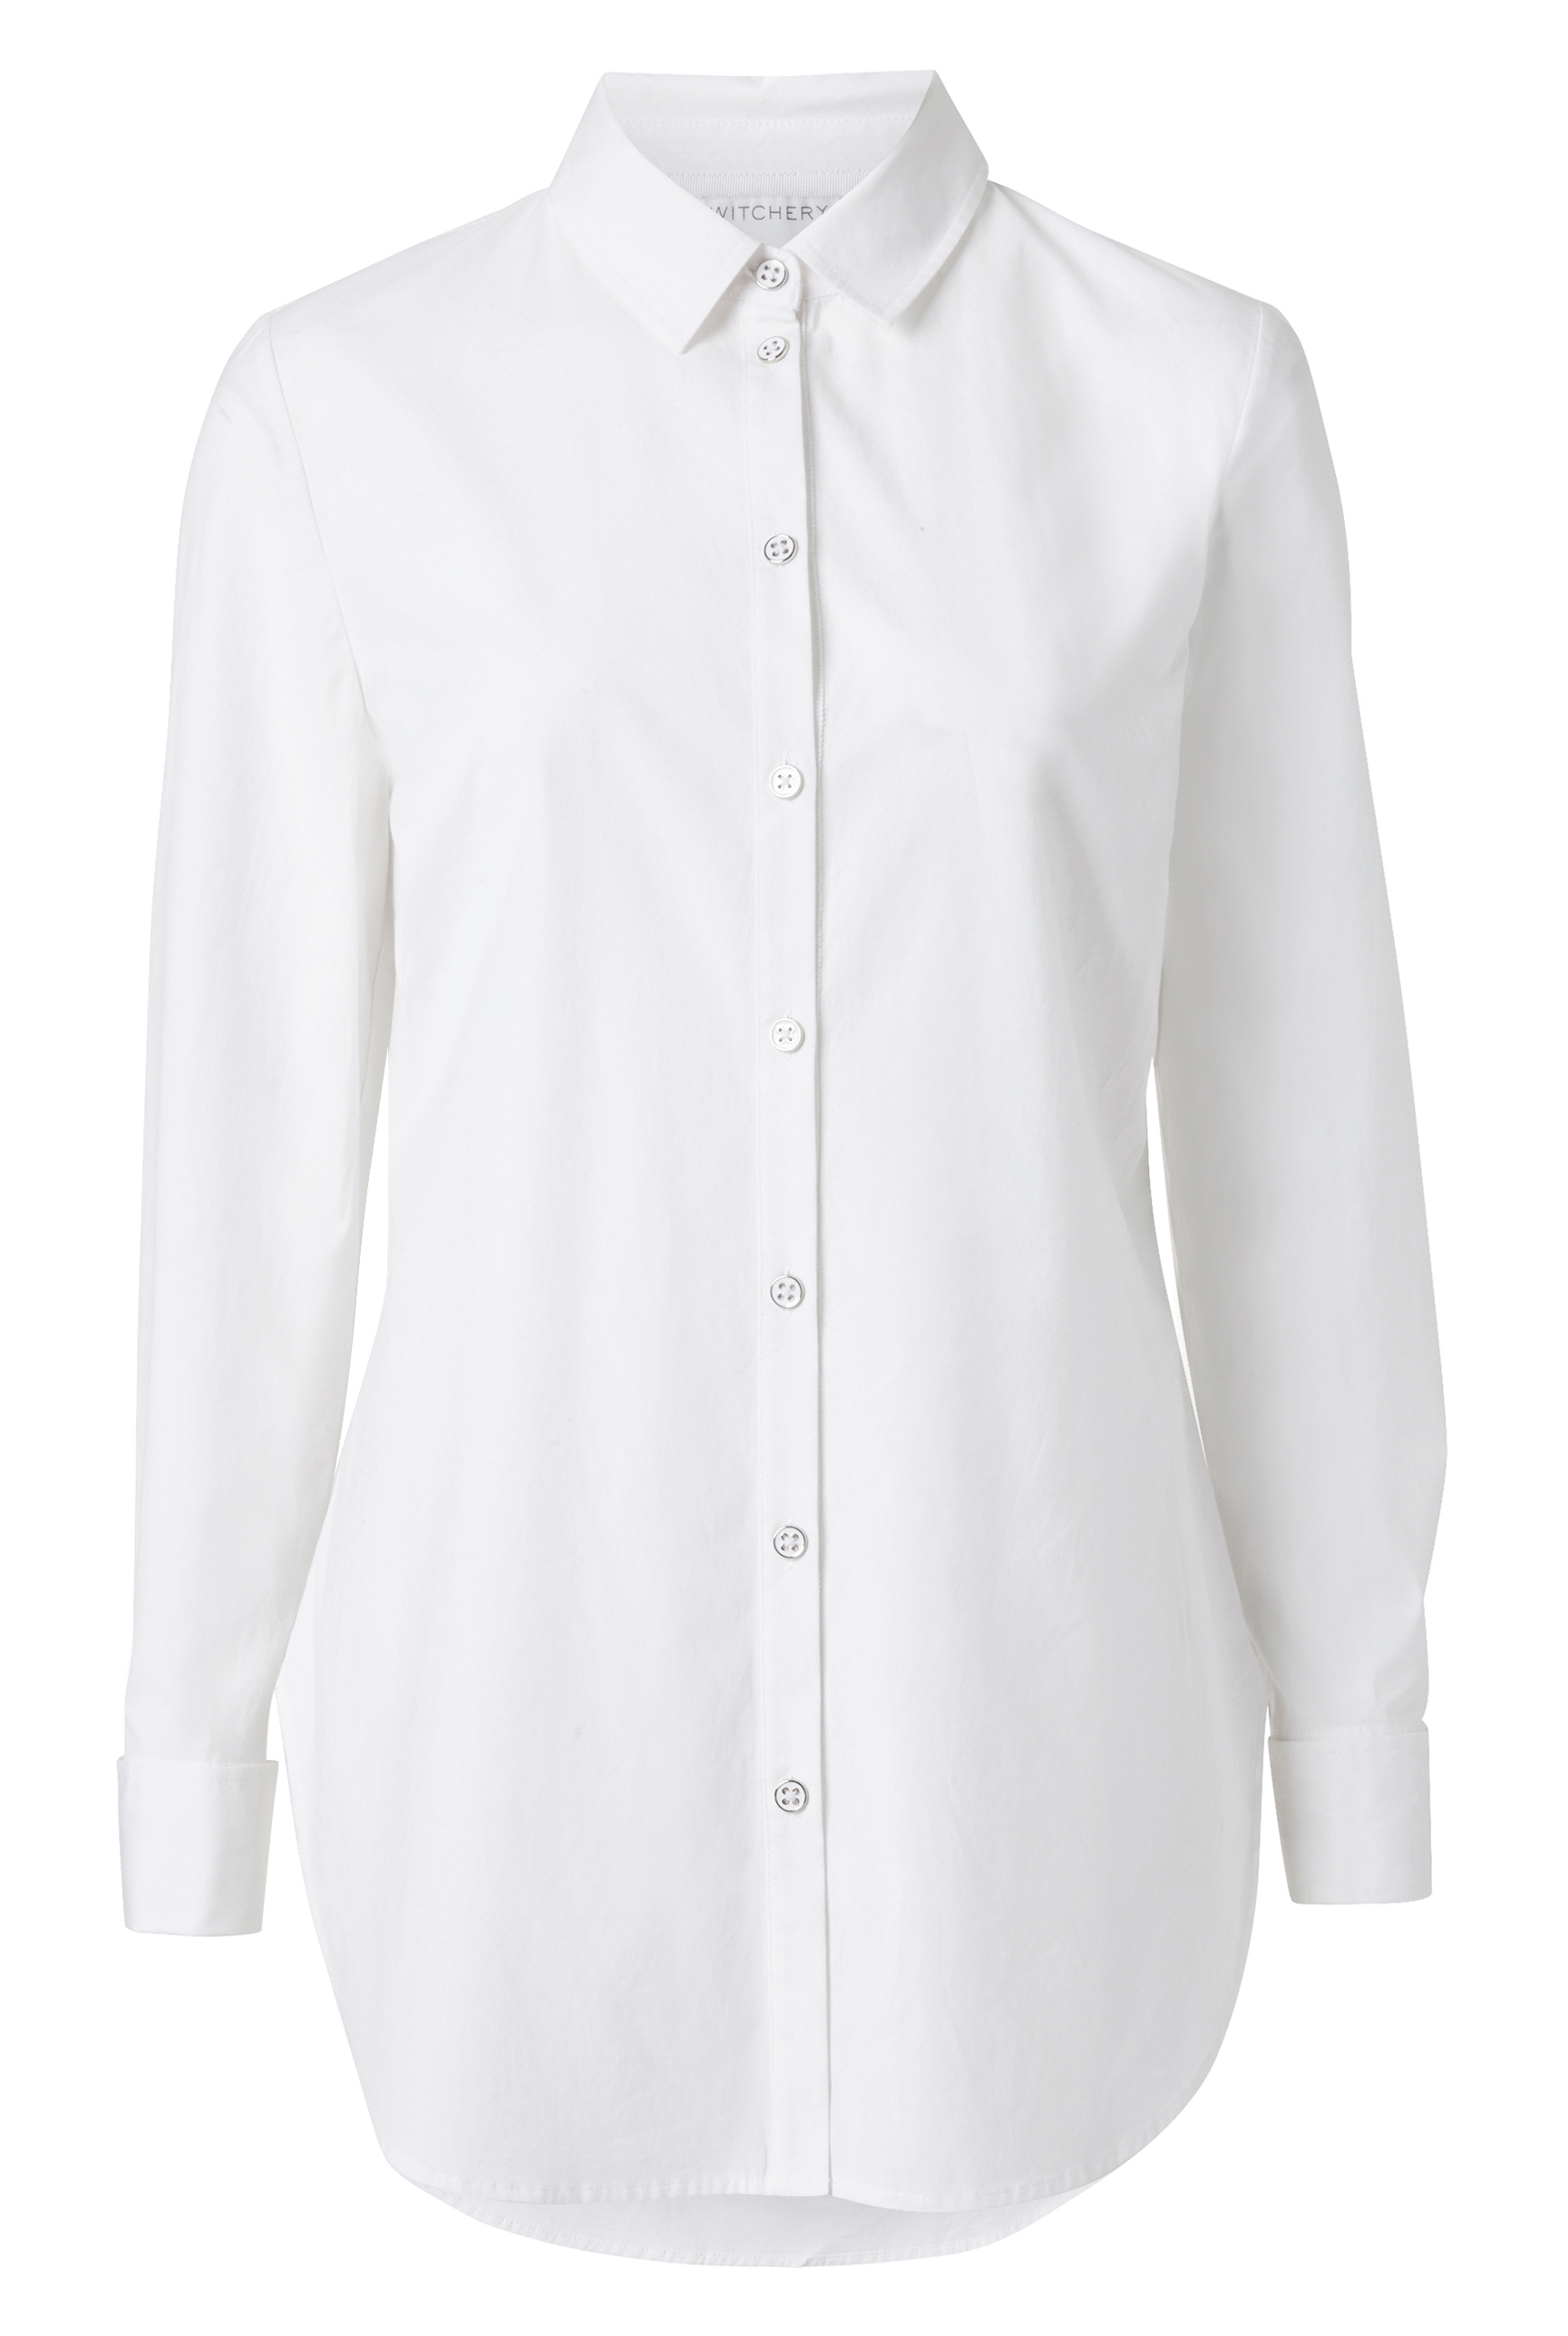 60208480_Witchery OCRF Cotton Shirt, RRP$149.90